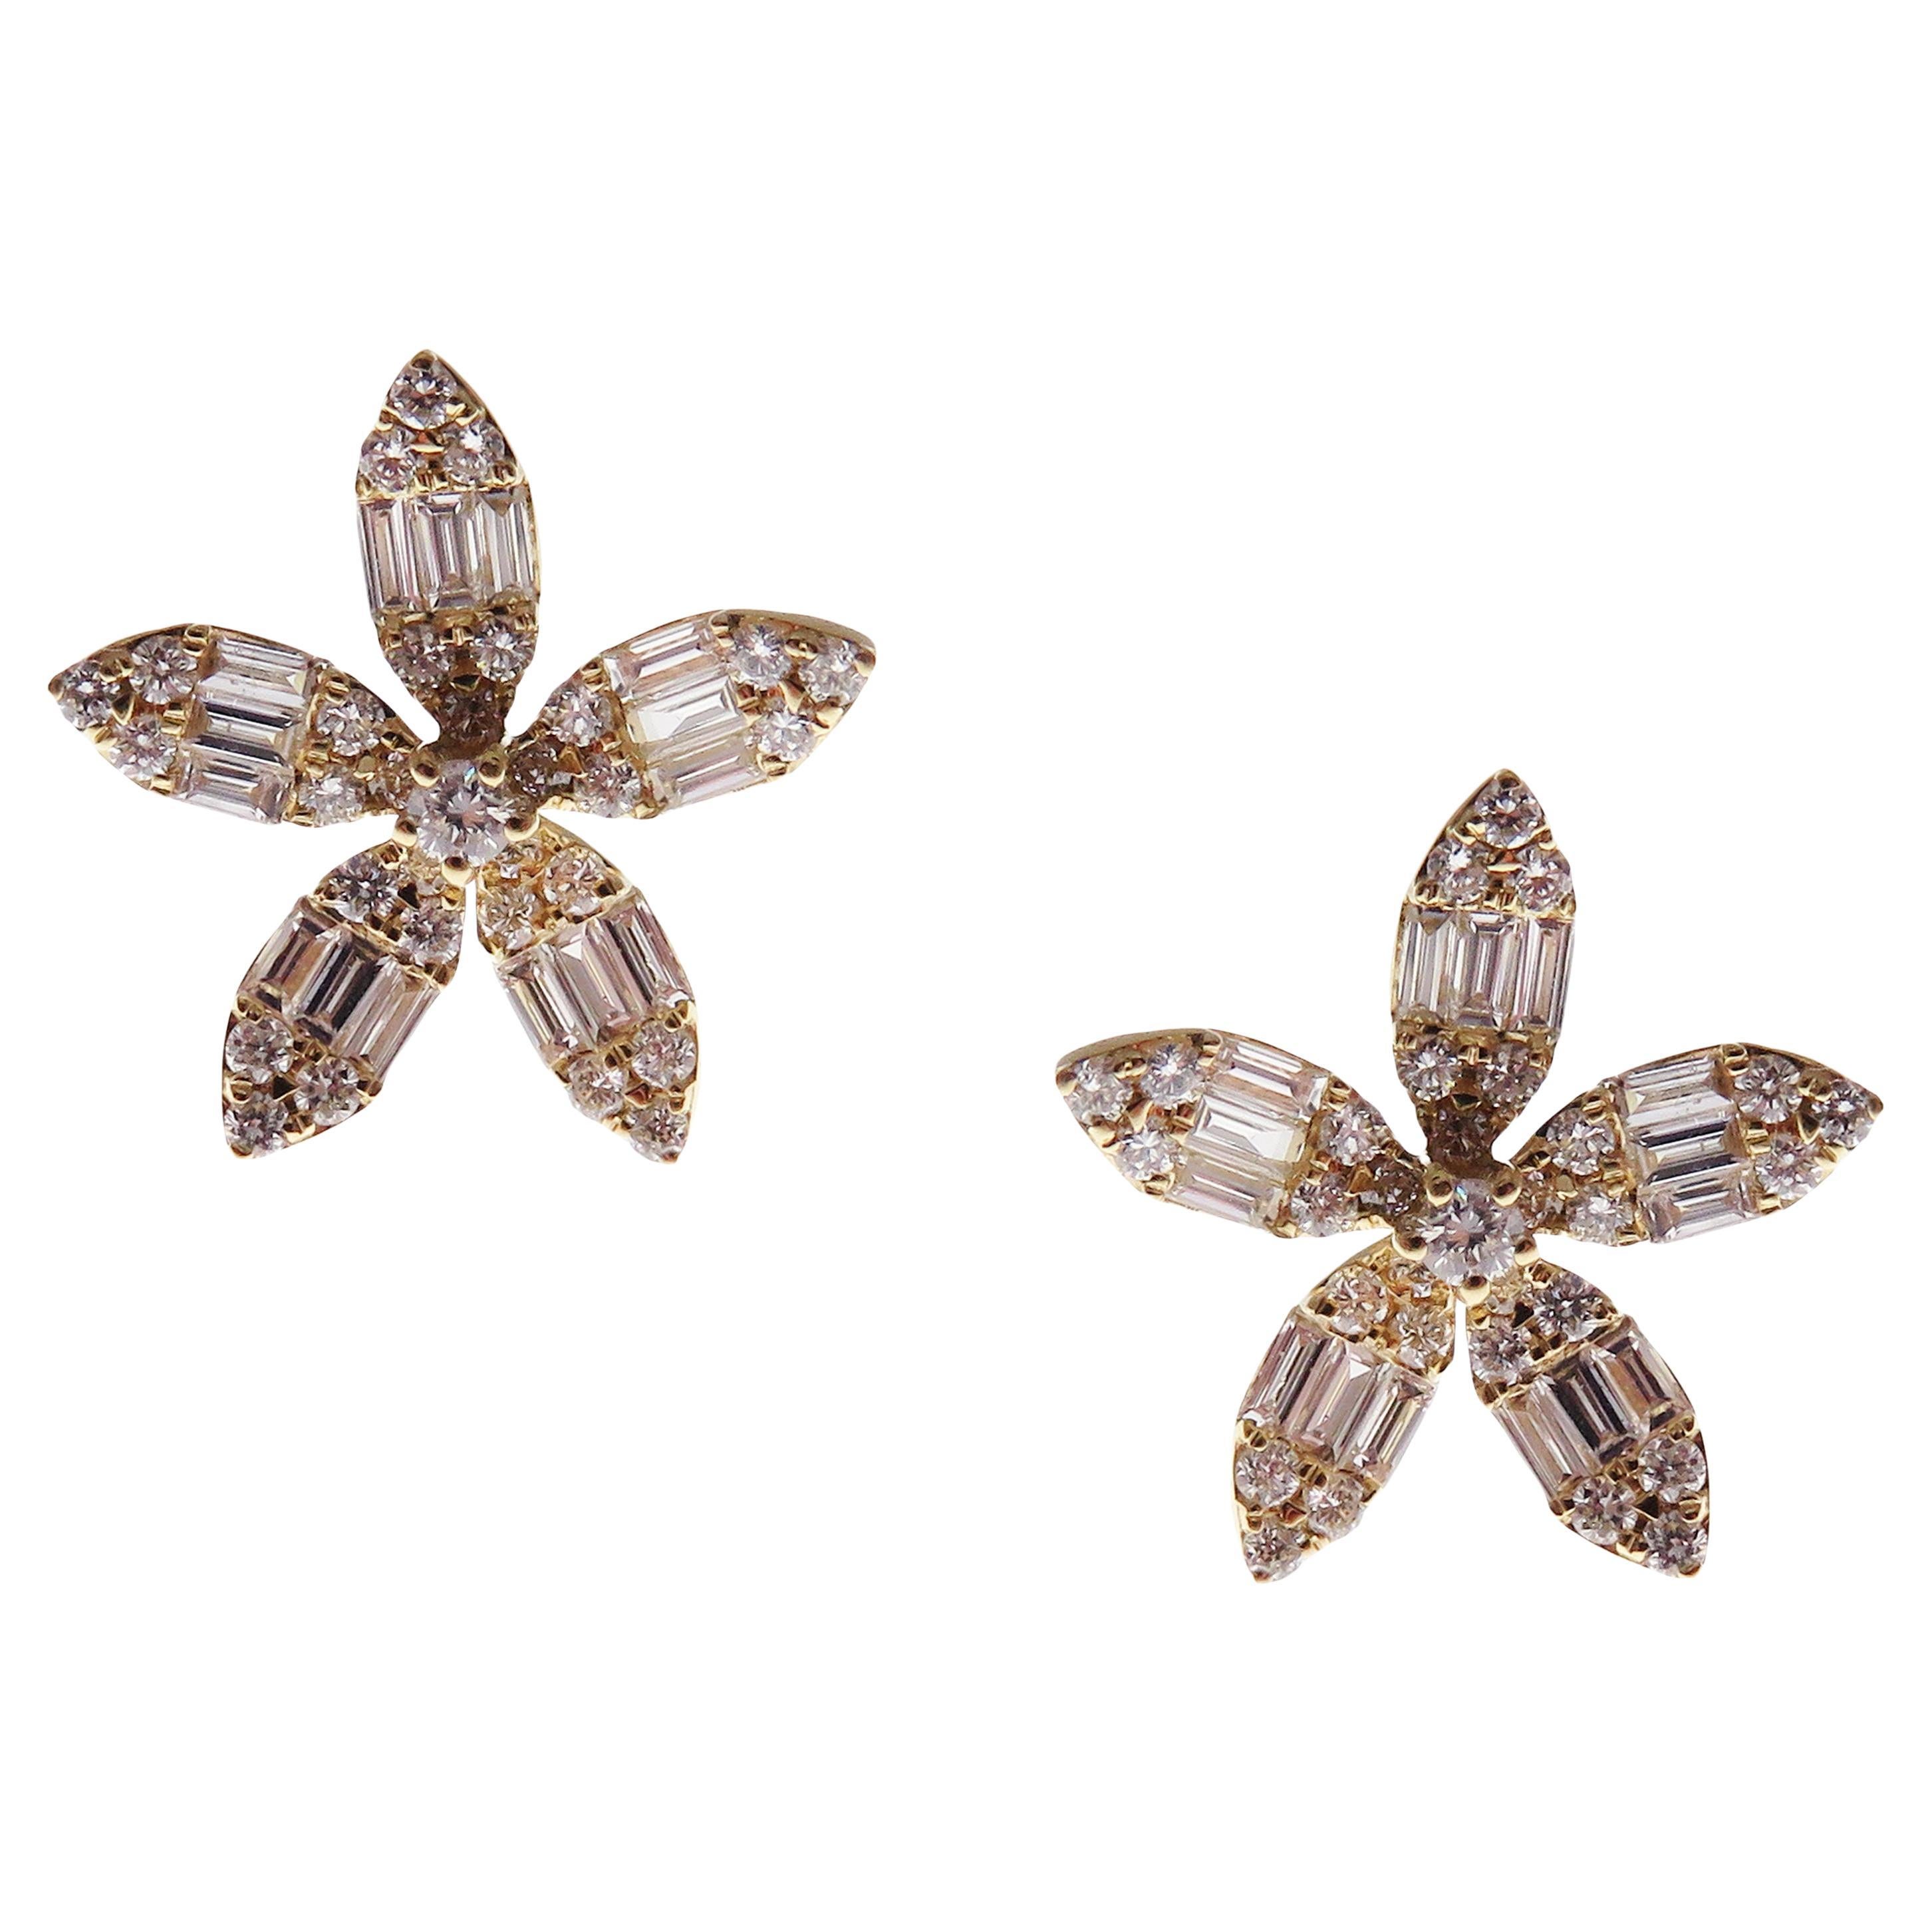 18-Karat Yellow Gold White Baguette Diamonds Flower Stud Earrings